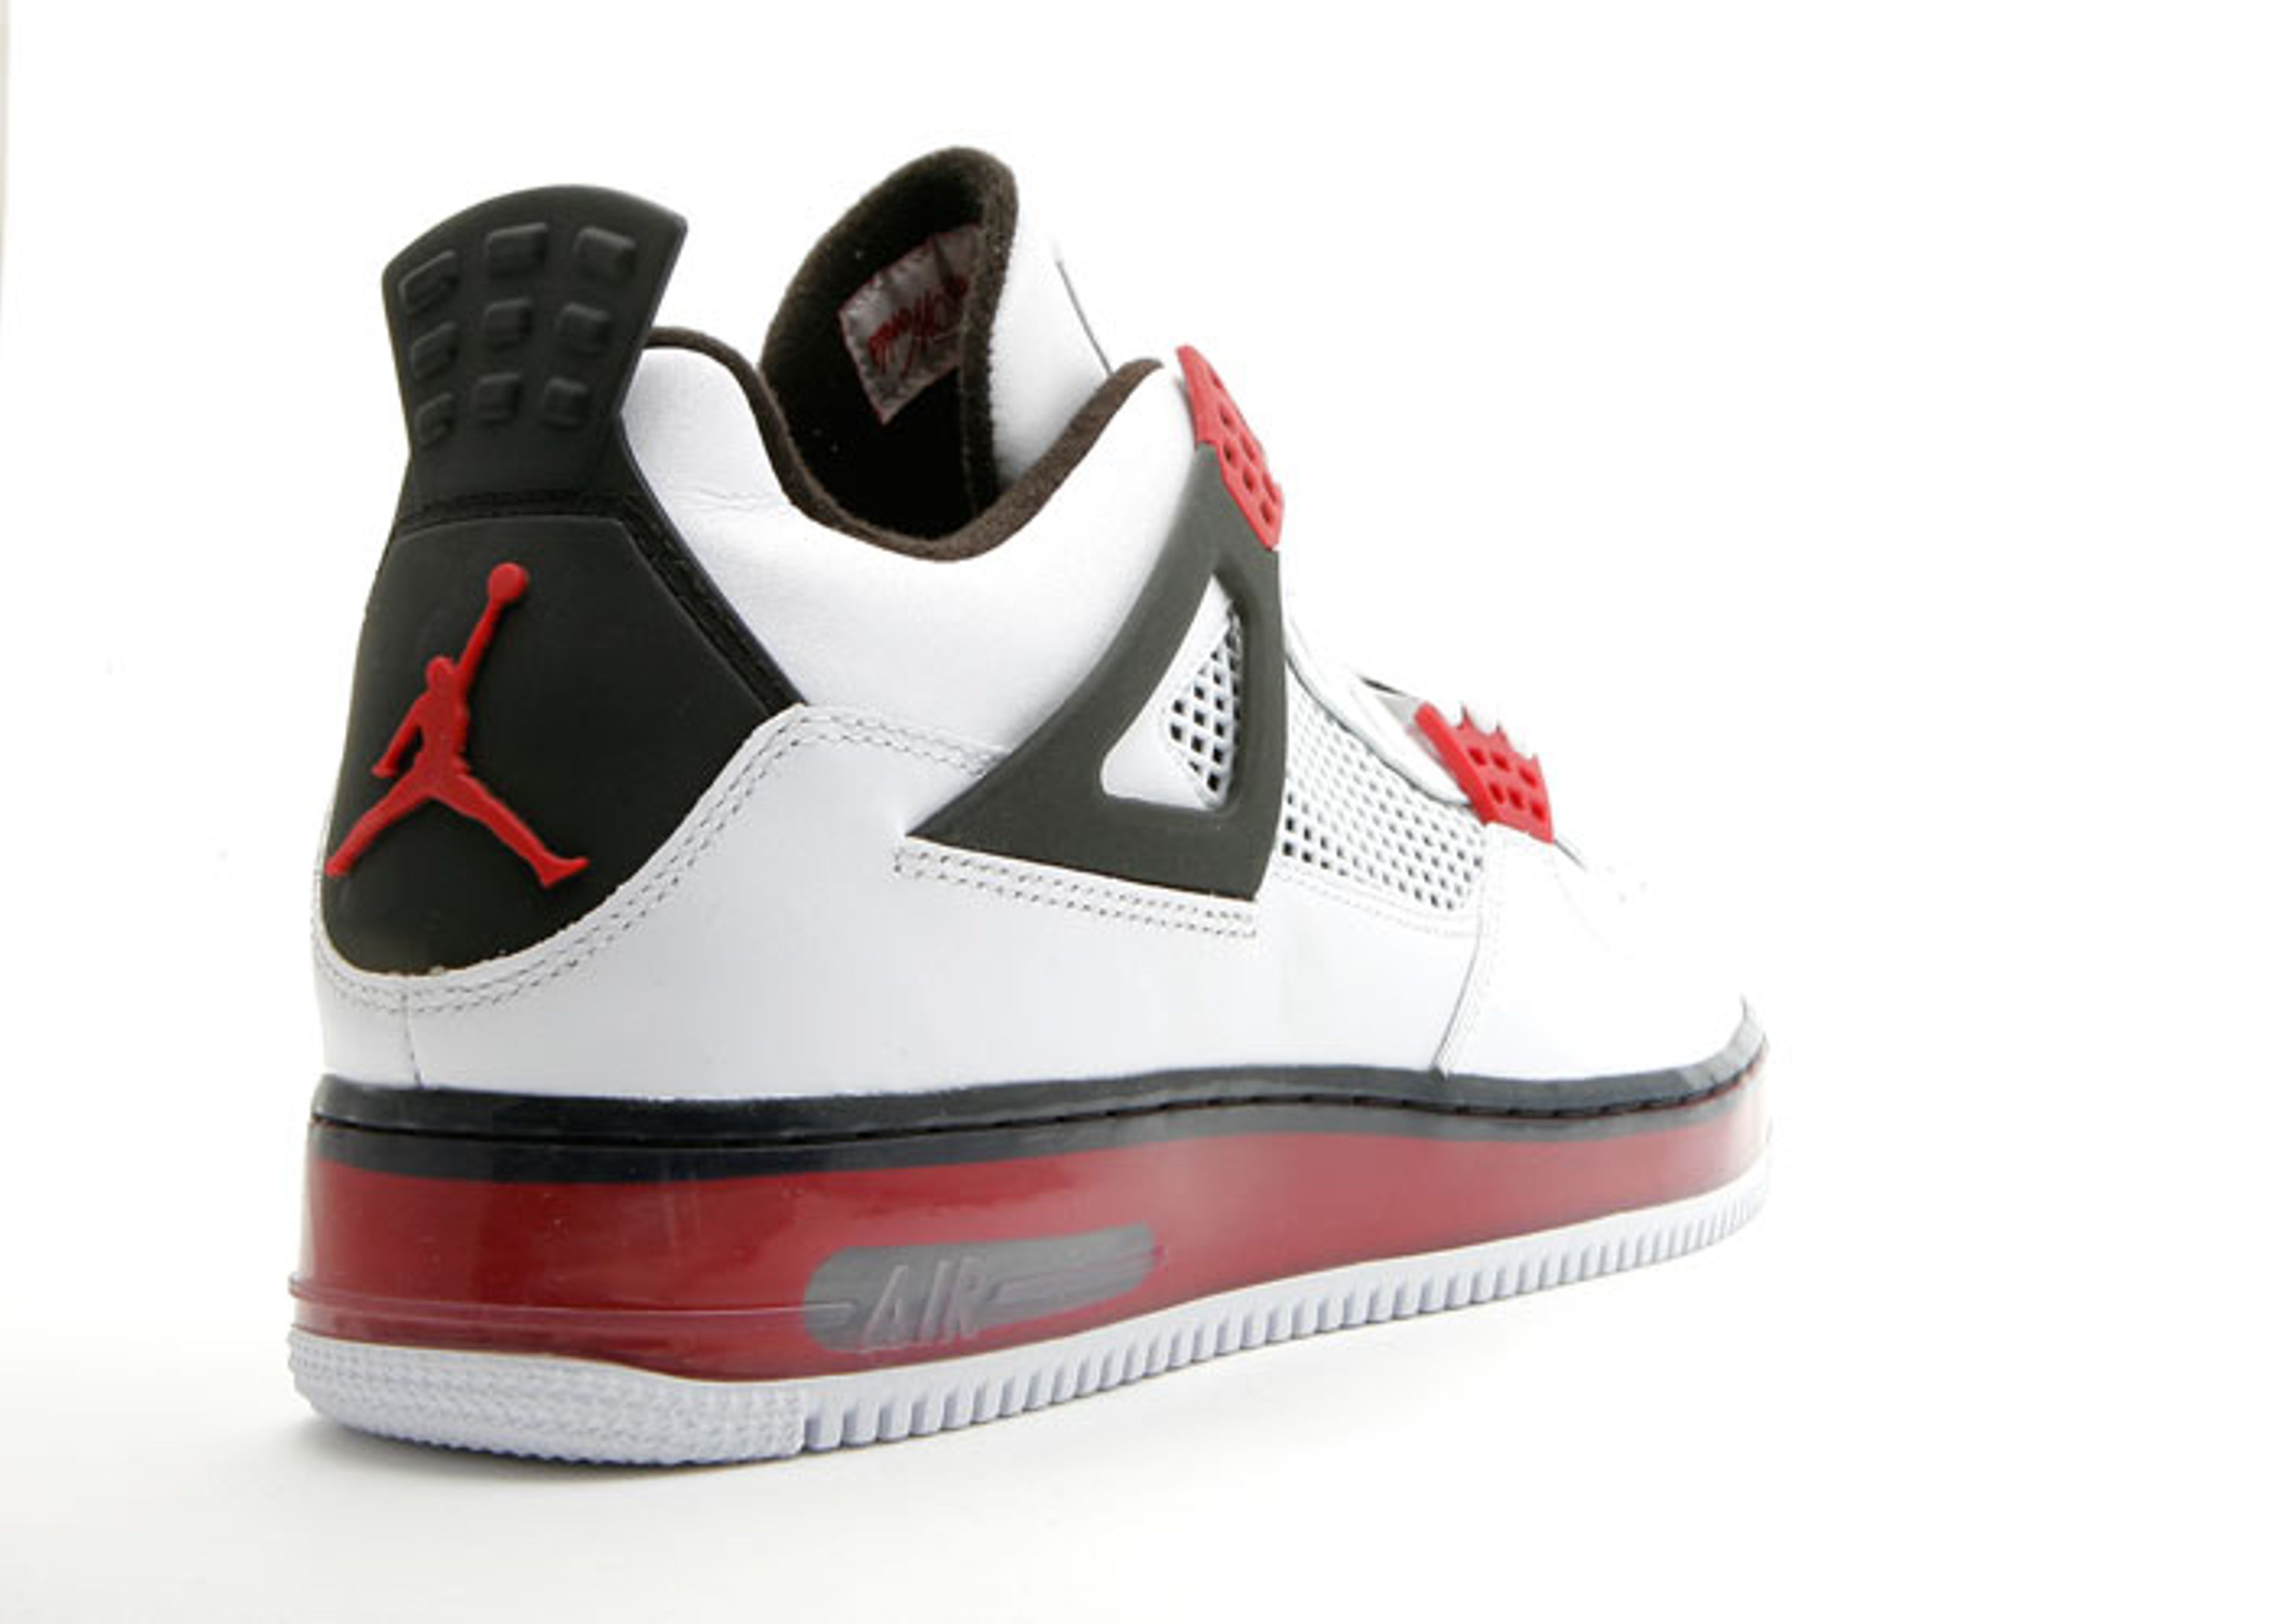 Nike AJF4 - Jordan Fusion 4 - White Varsity Red - 364342-161 - Size 13 -  New 